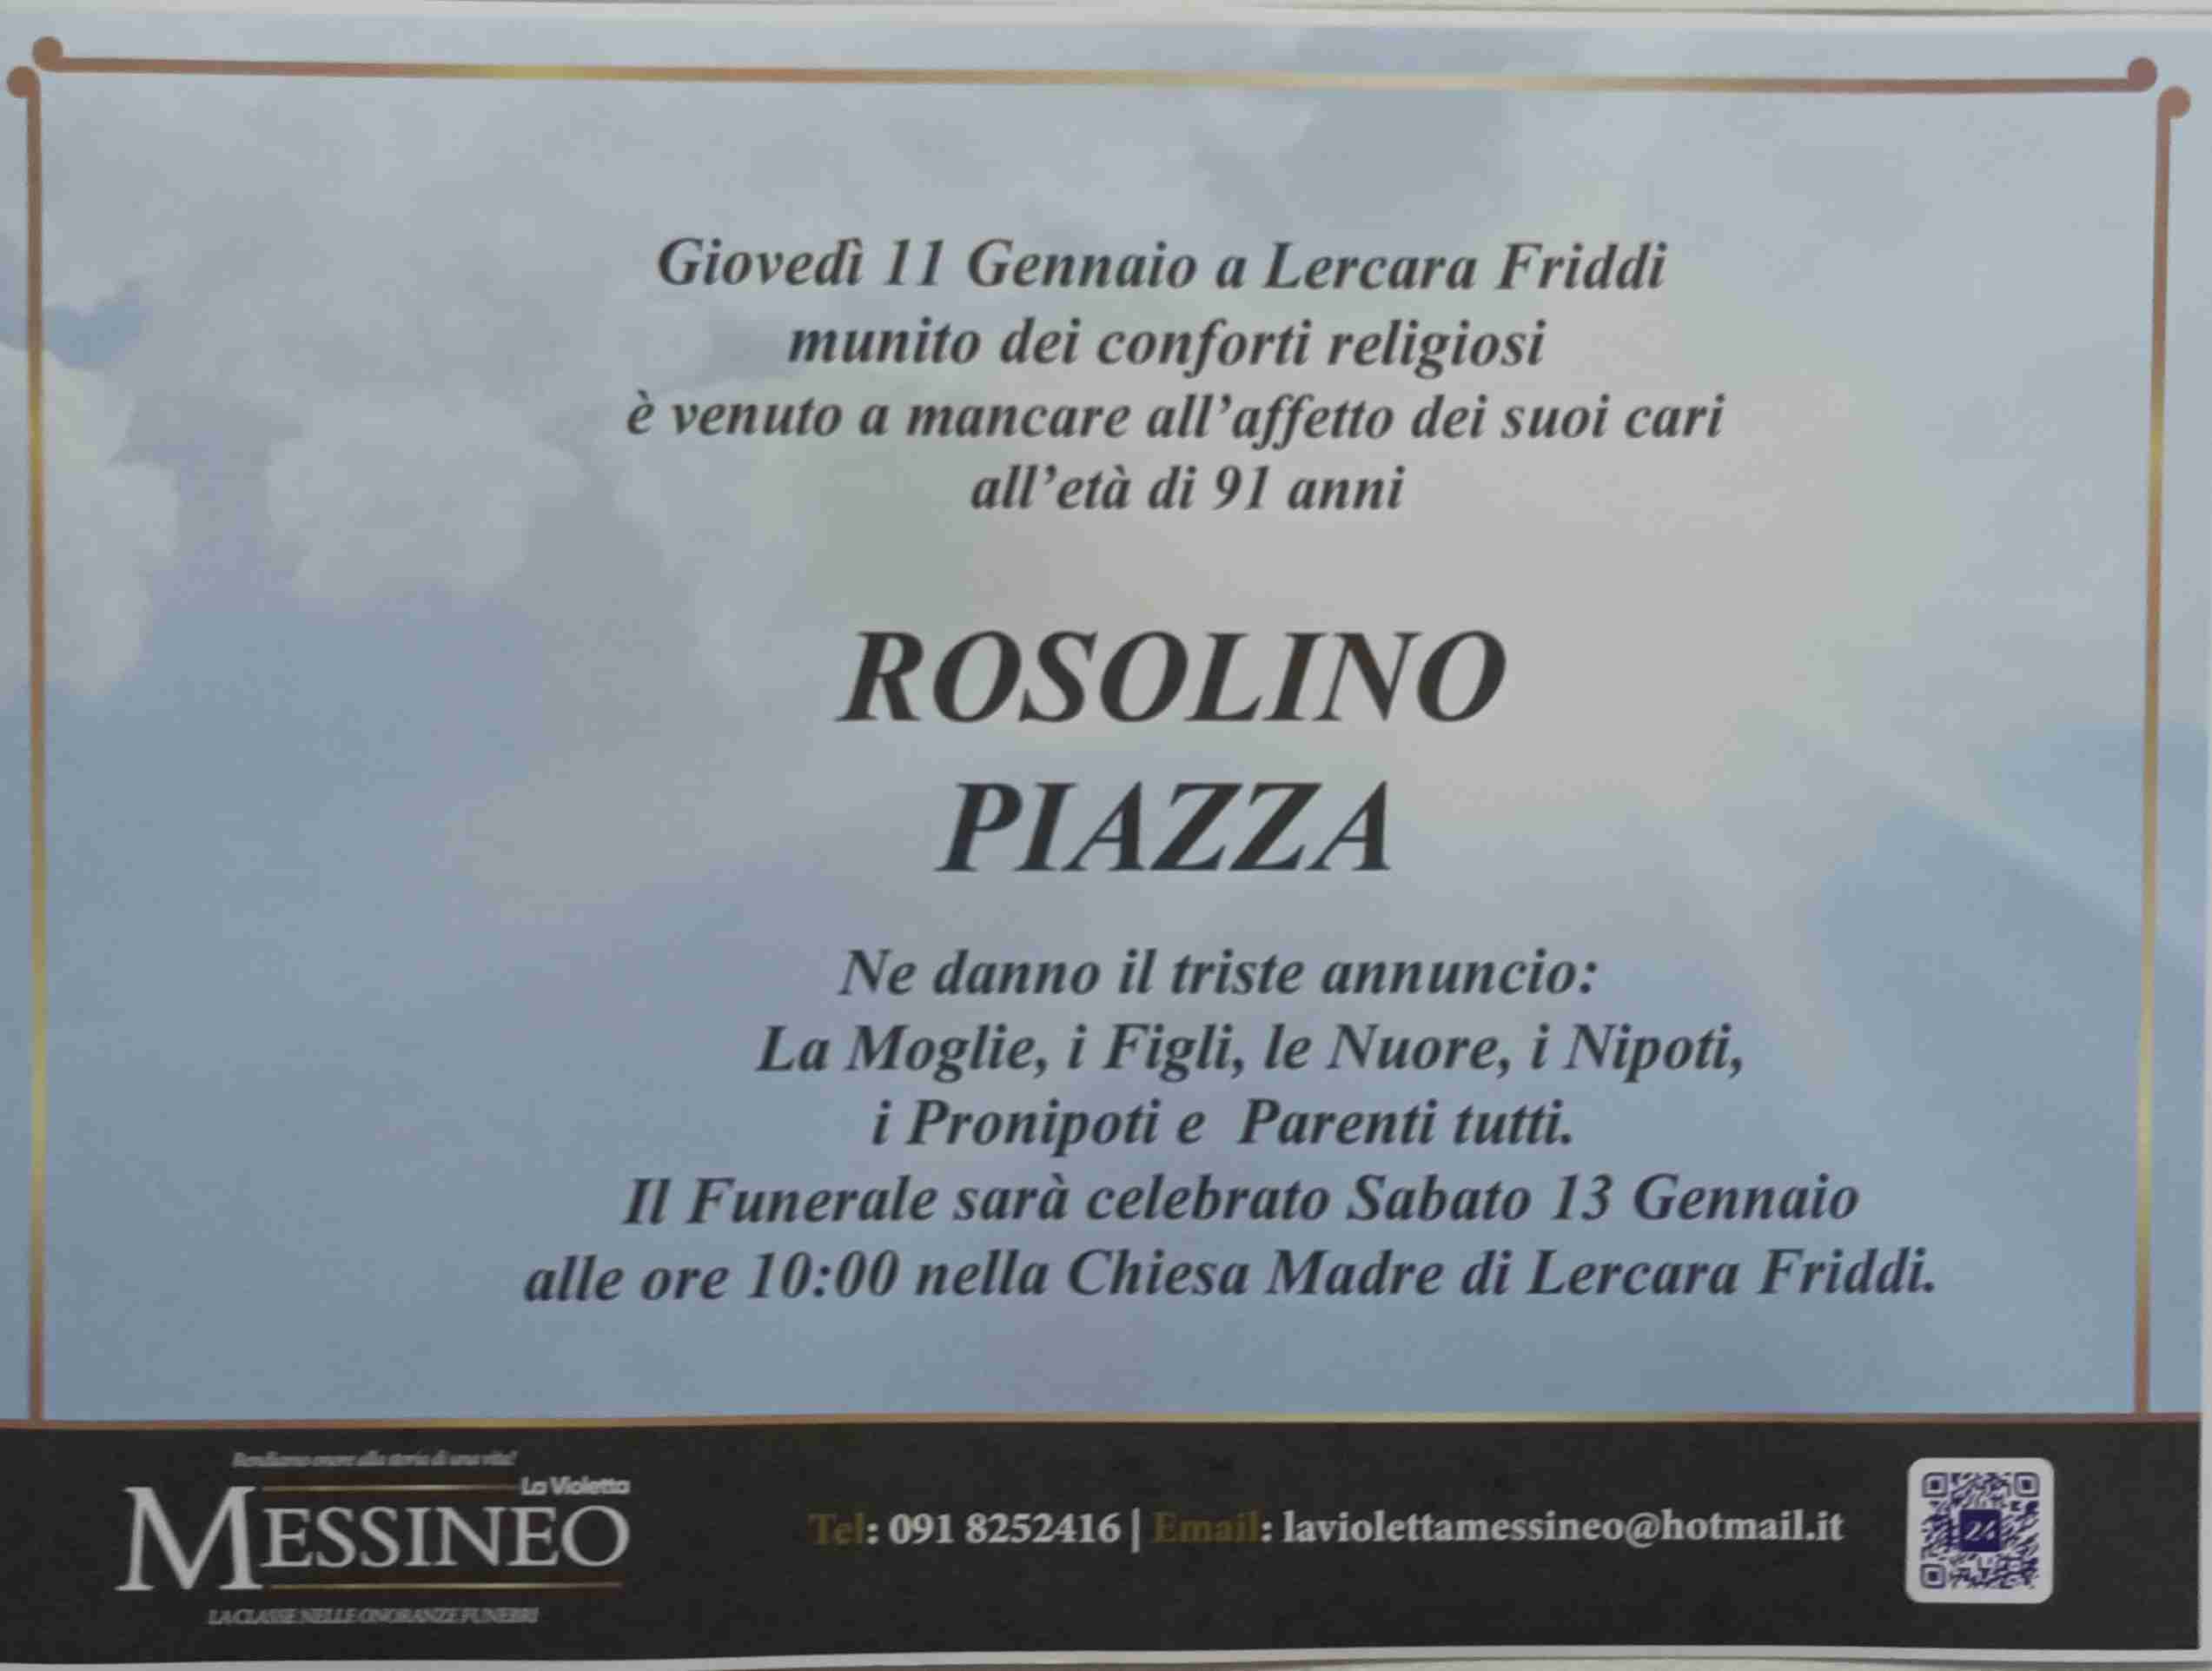 Rosolino Piazza